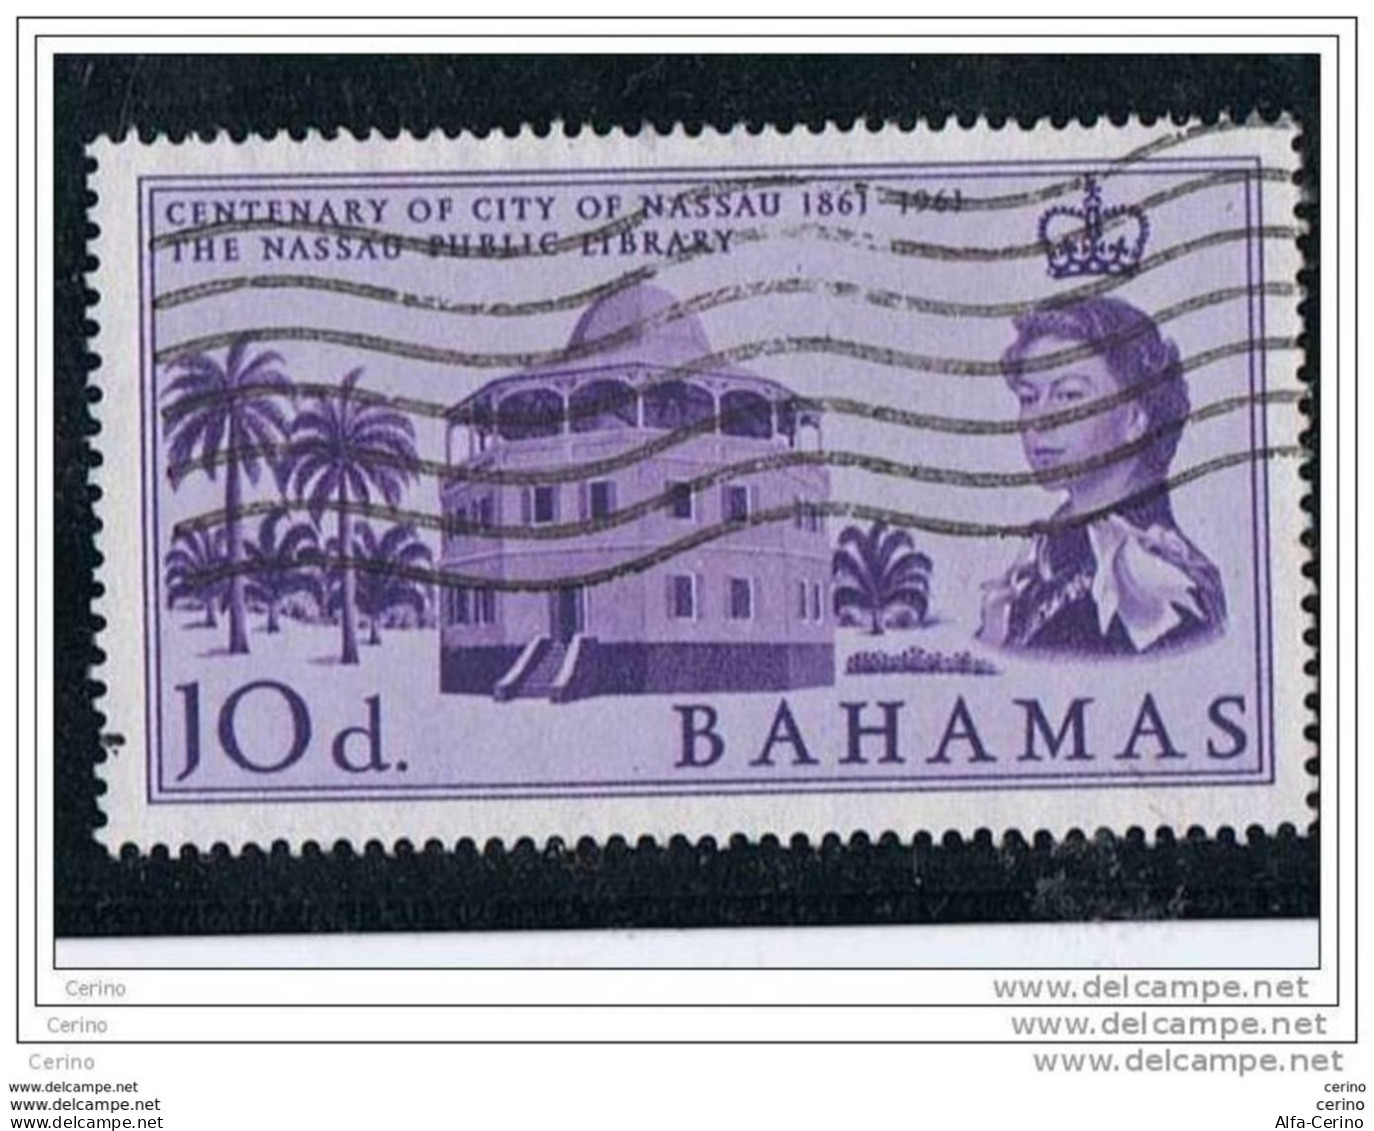 BAHAMAS:  1962  CENTENARY  NASSAU  CITY  -  10 P. USED  STAMP  -  YV/TELL. 168 - 1859-1963 Colonie Britannique